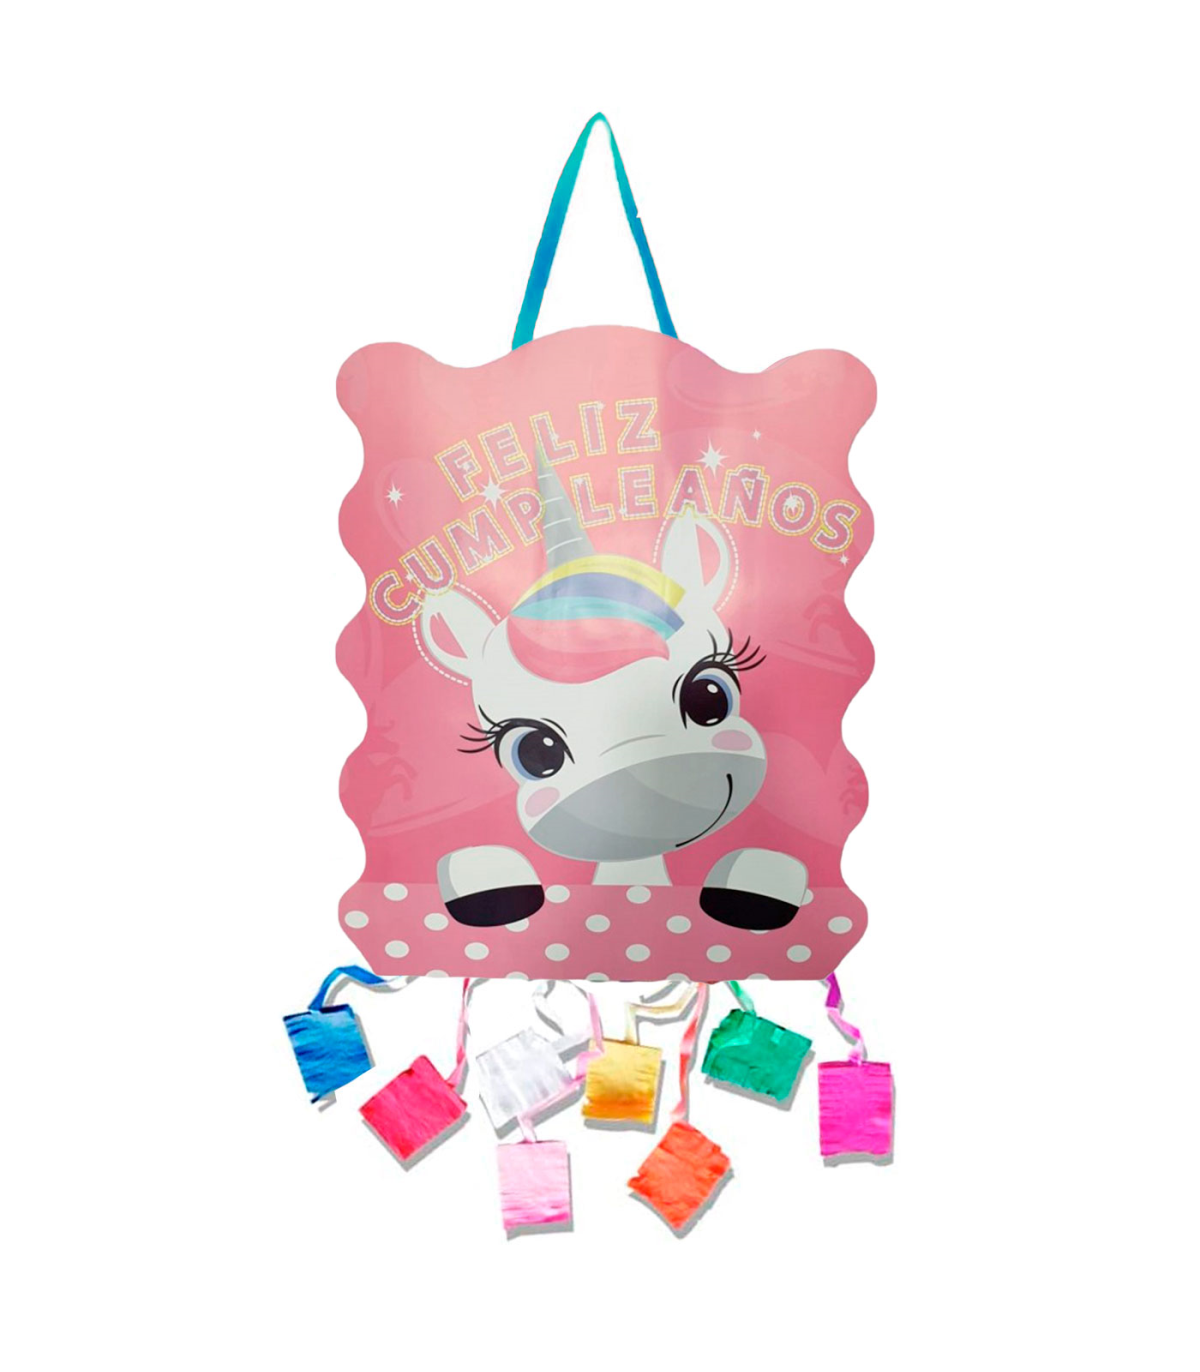 Tradineur - Piñata de unicornio, feliz cumpleaños, cartón, rellenar con  golosinas, chuches, decoración infantil para fiestas, ni